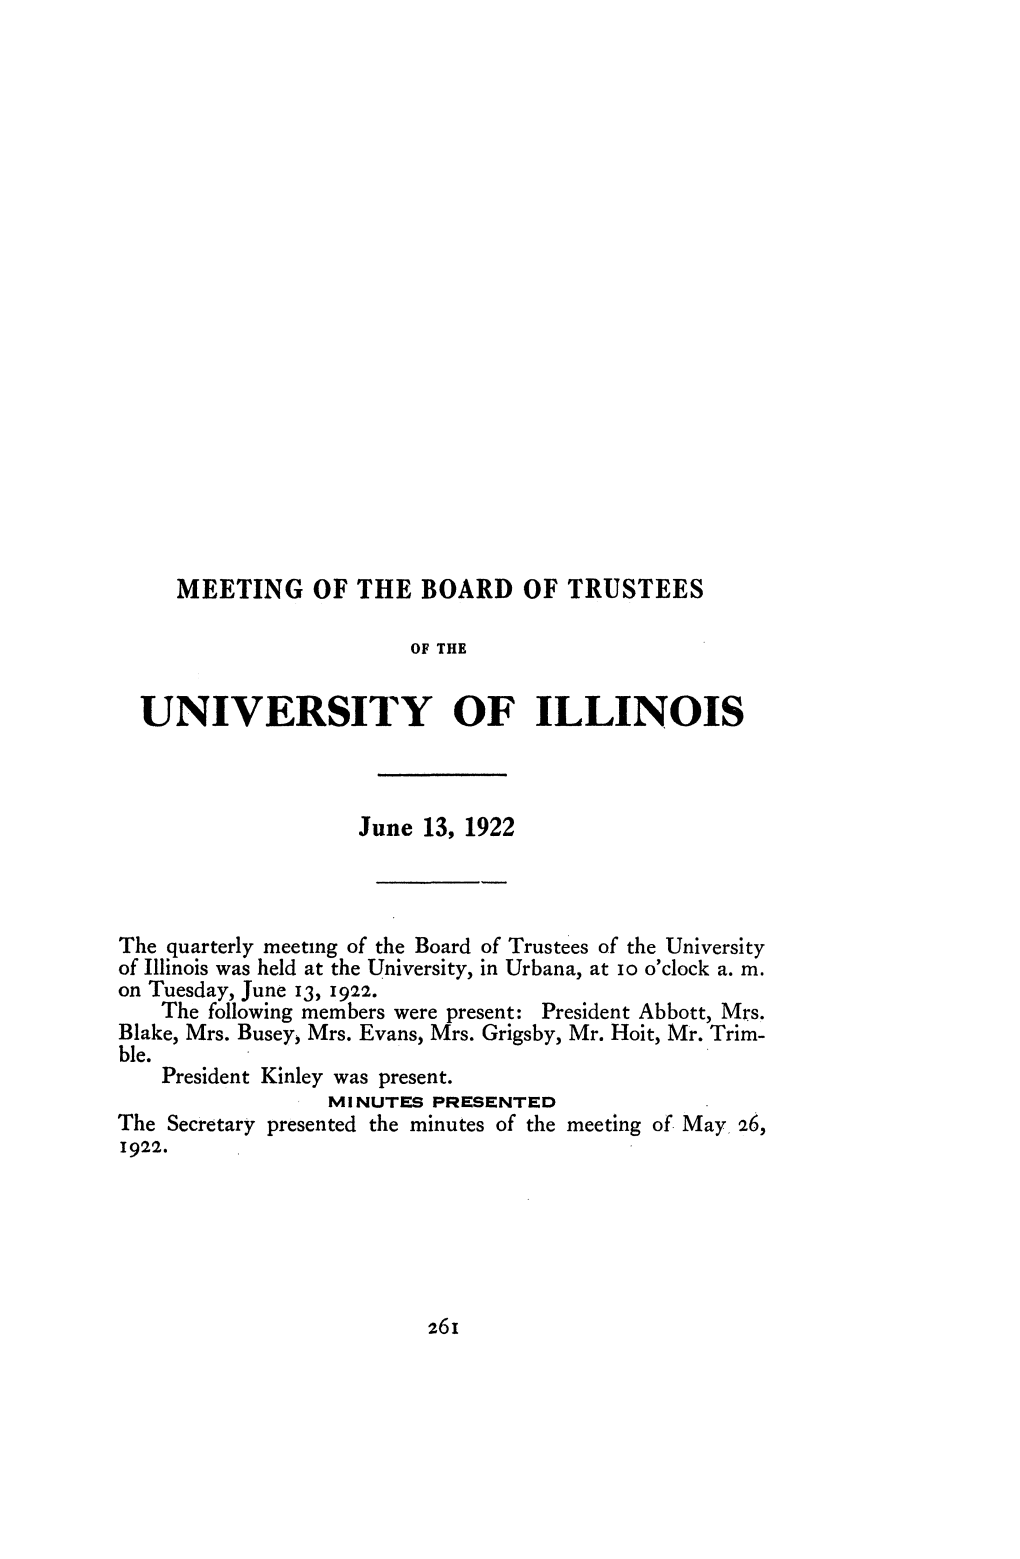 June 13, 1922, Minutes | UI Board of Trustees